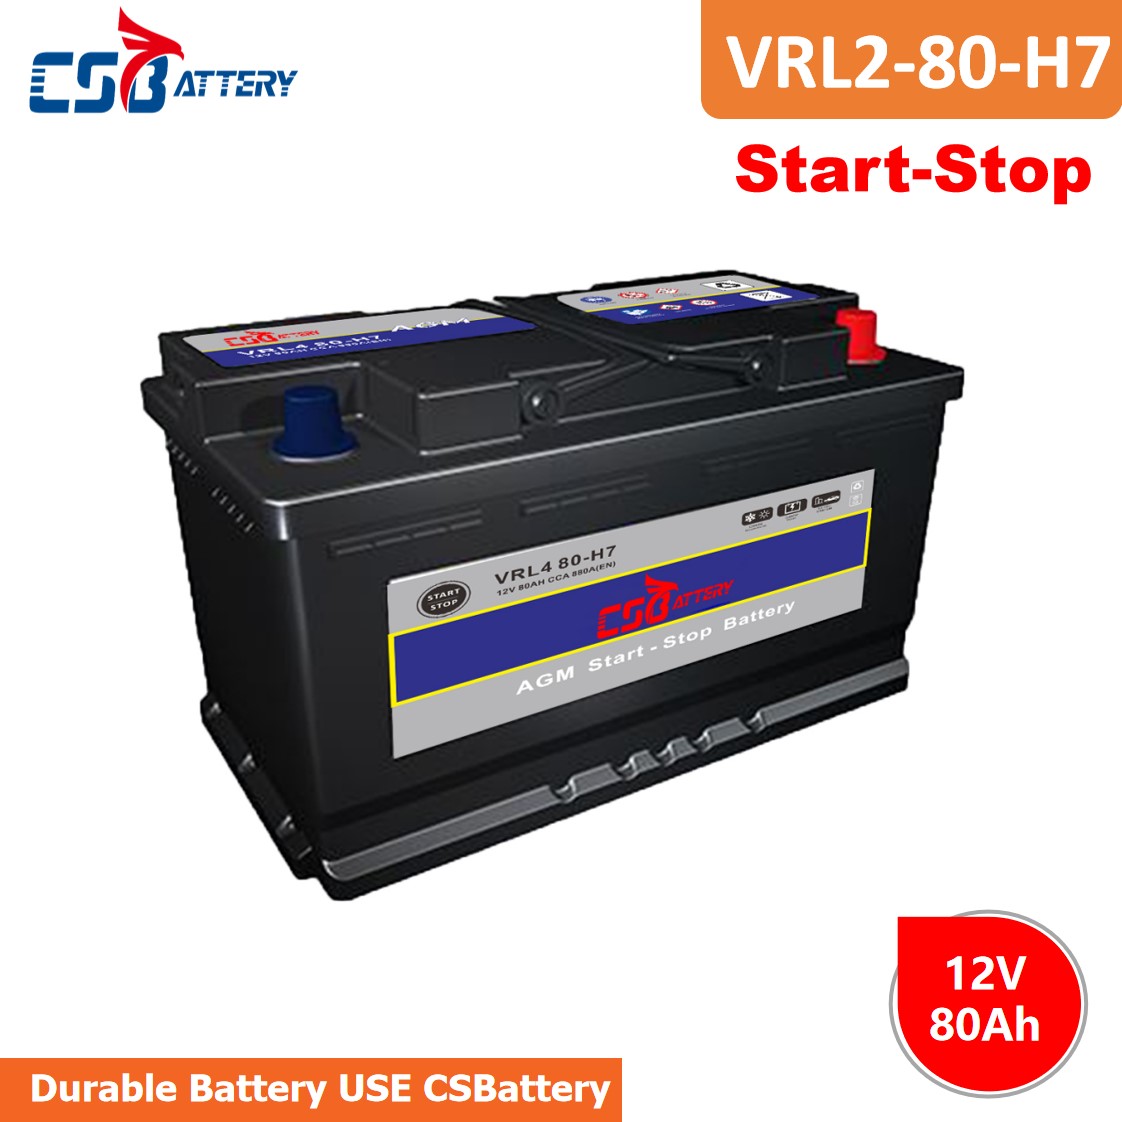 Start-Stop Car Batteries